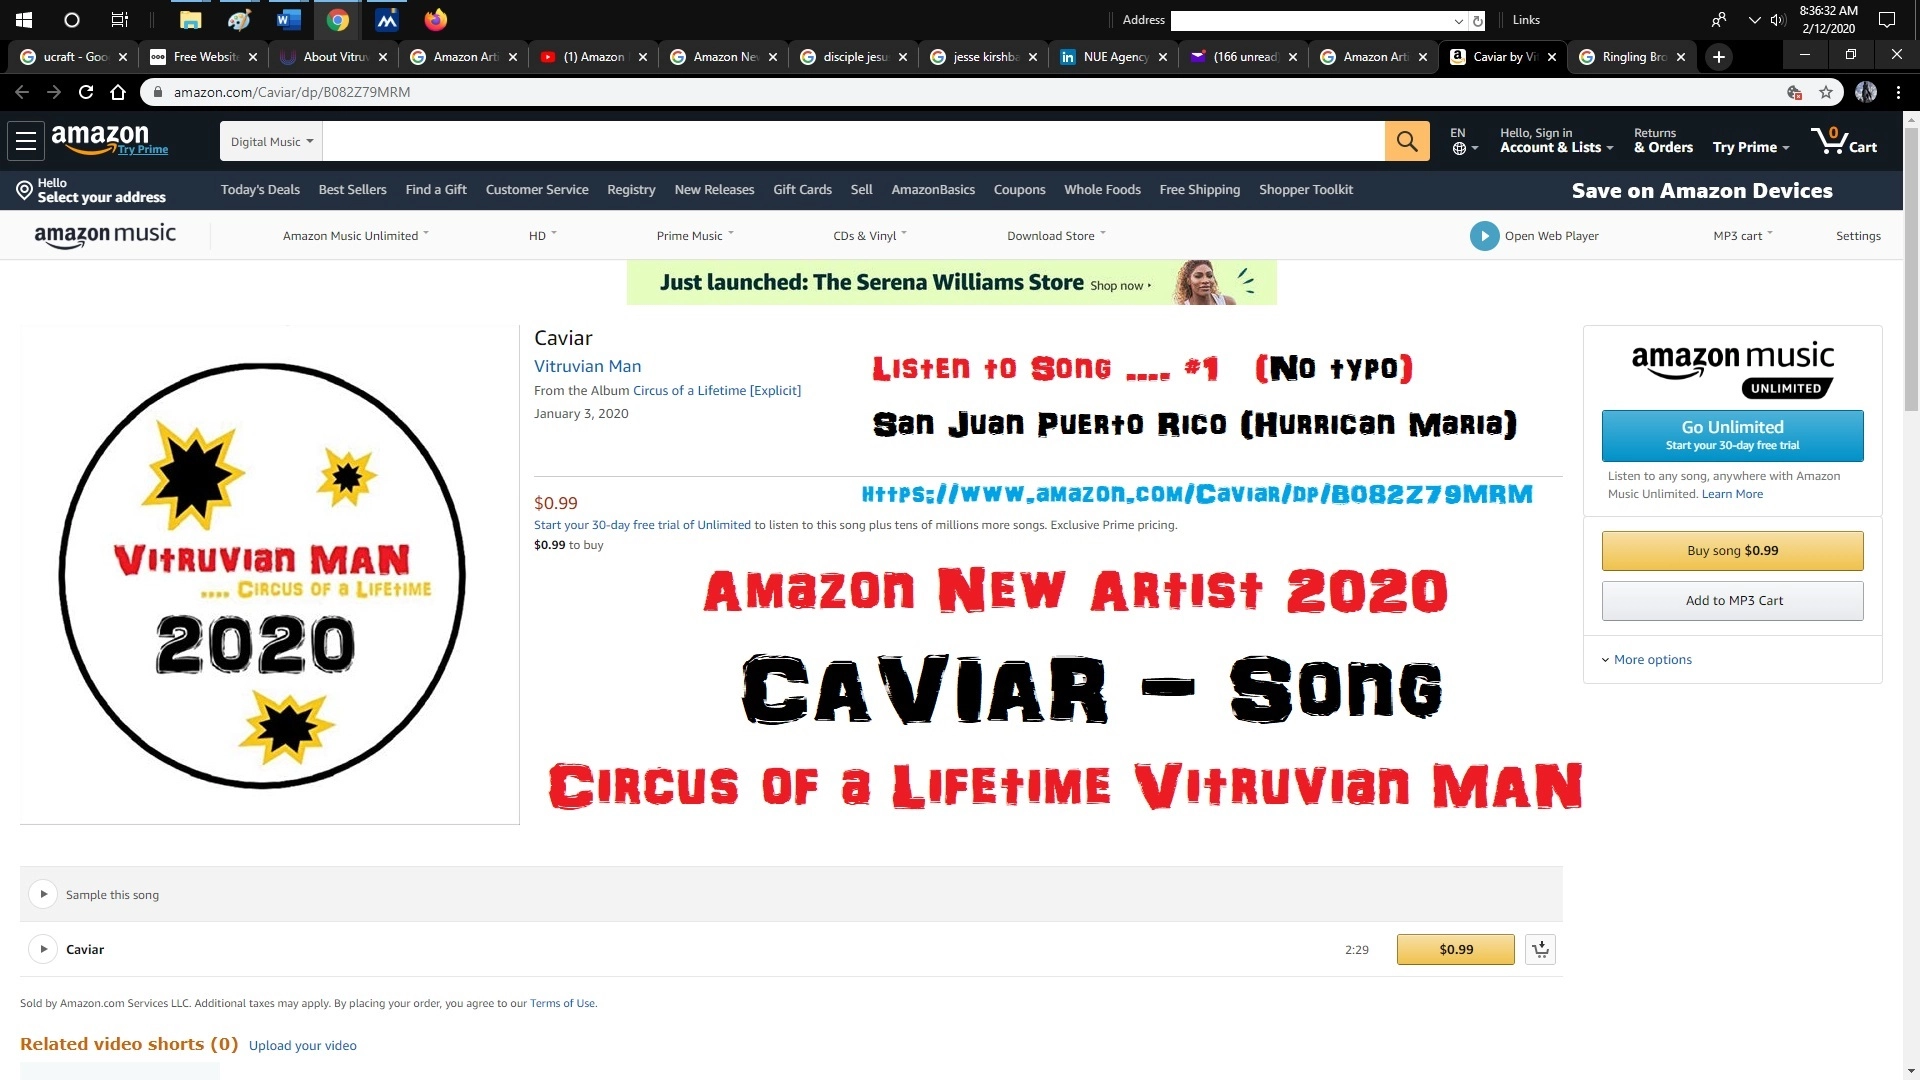 1053-amazon-new-artist-2020-caviar-vitruvian-man-15815955097166.jpg